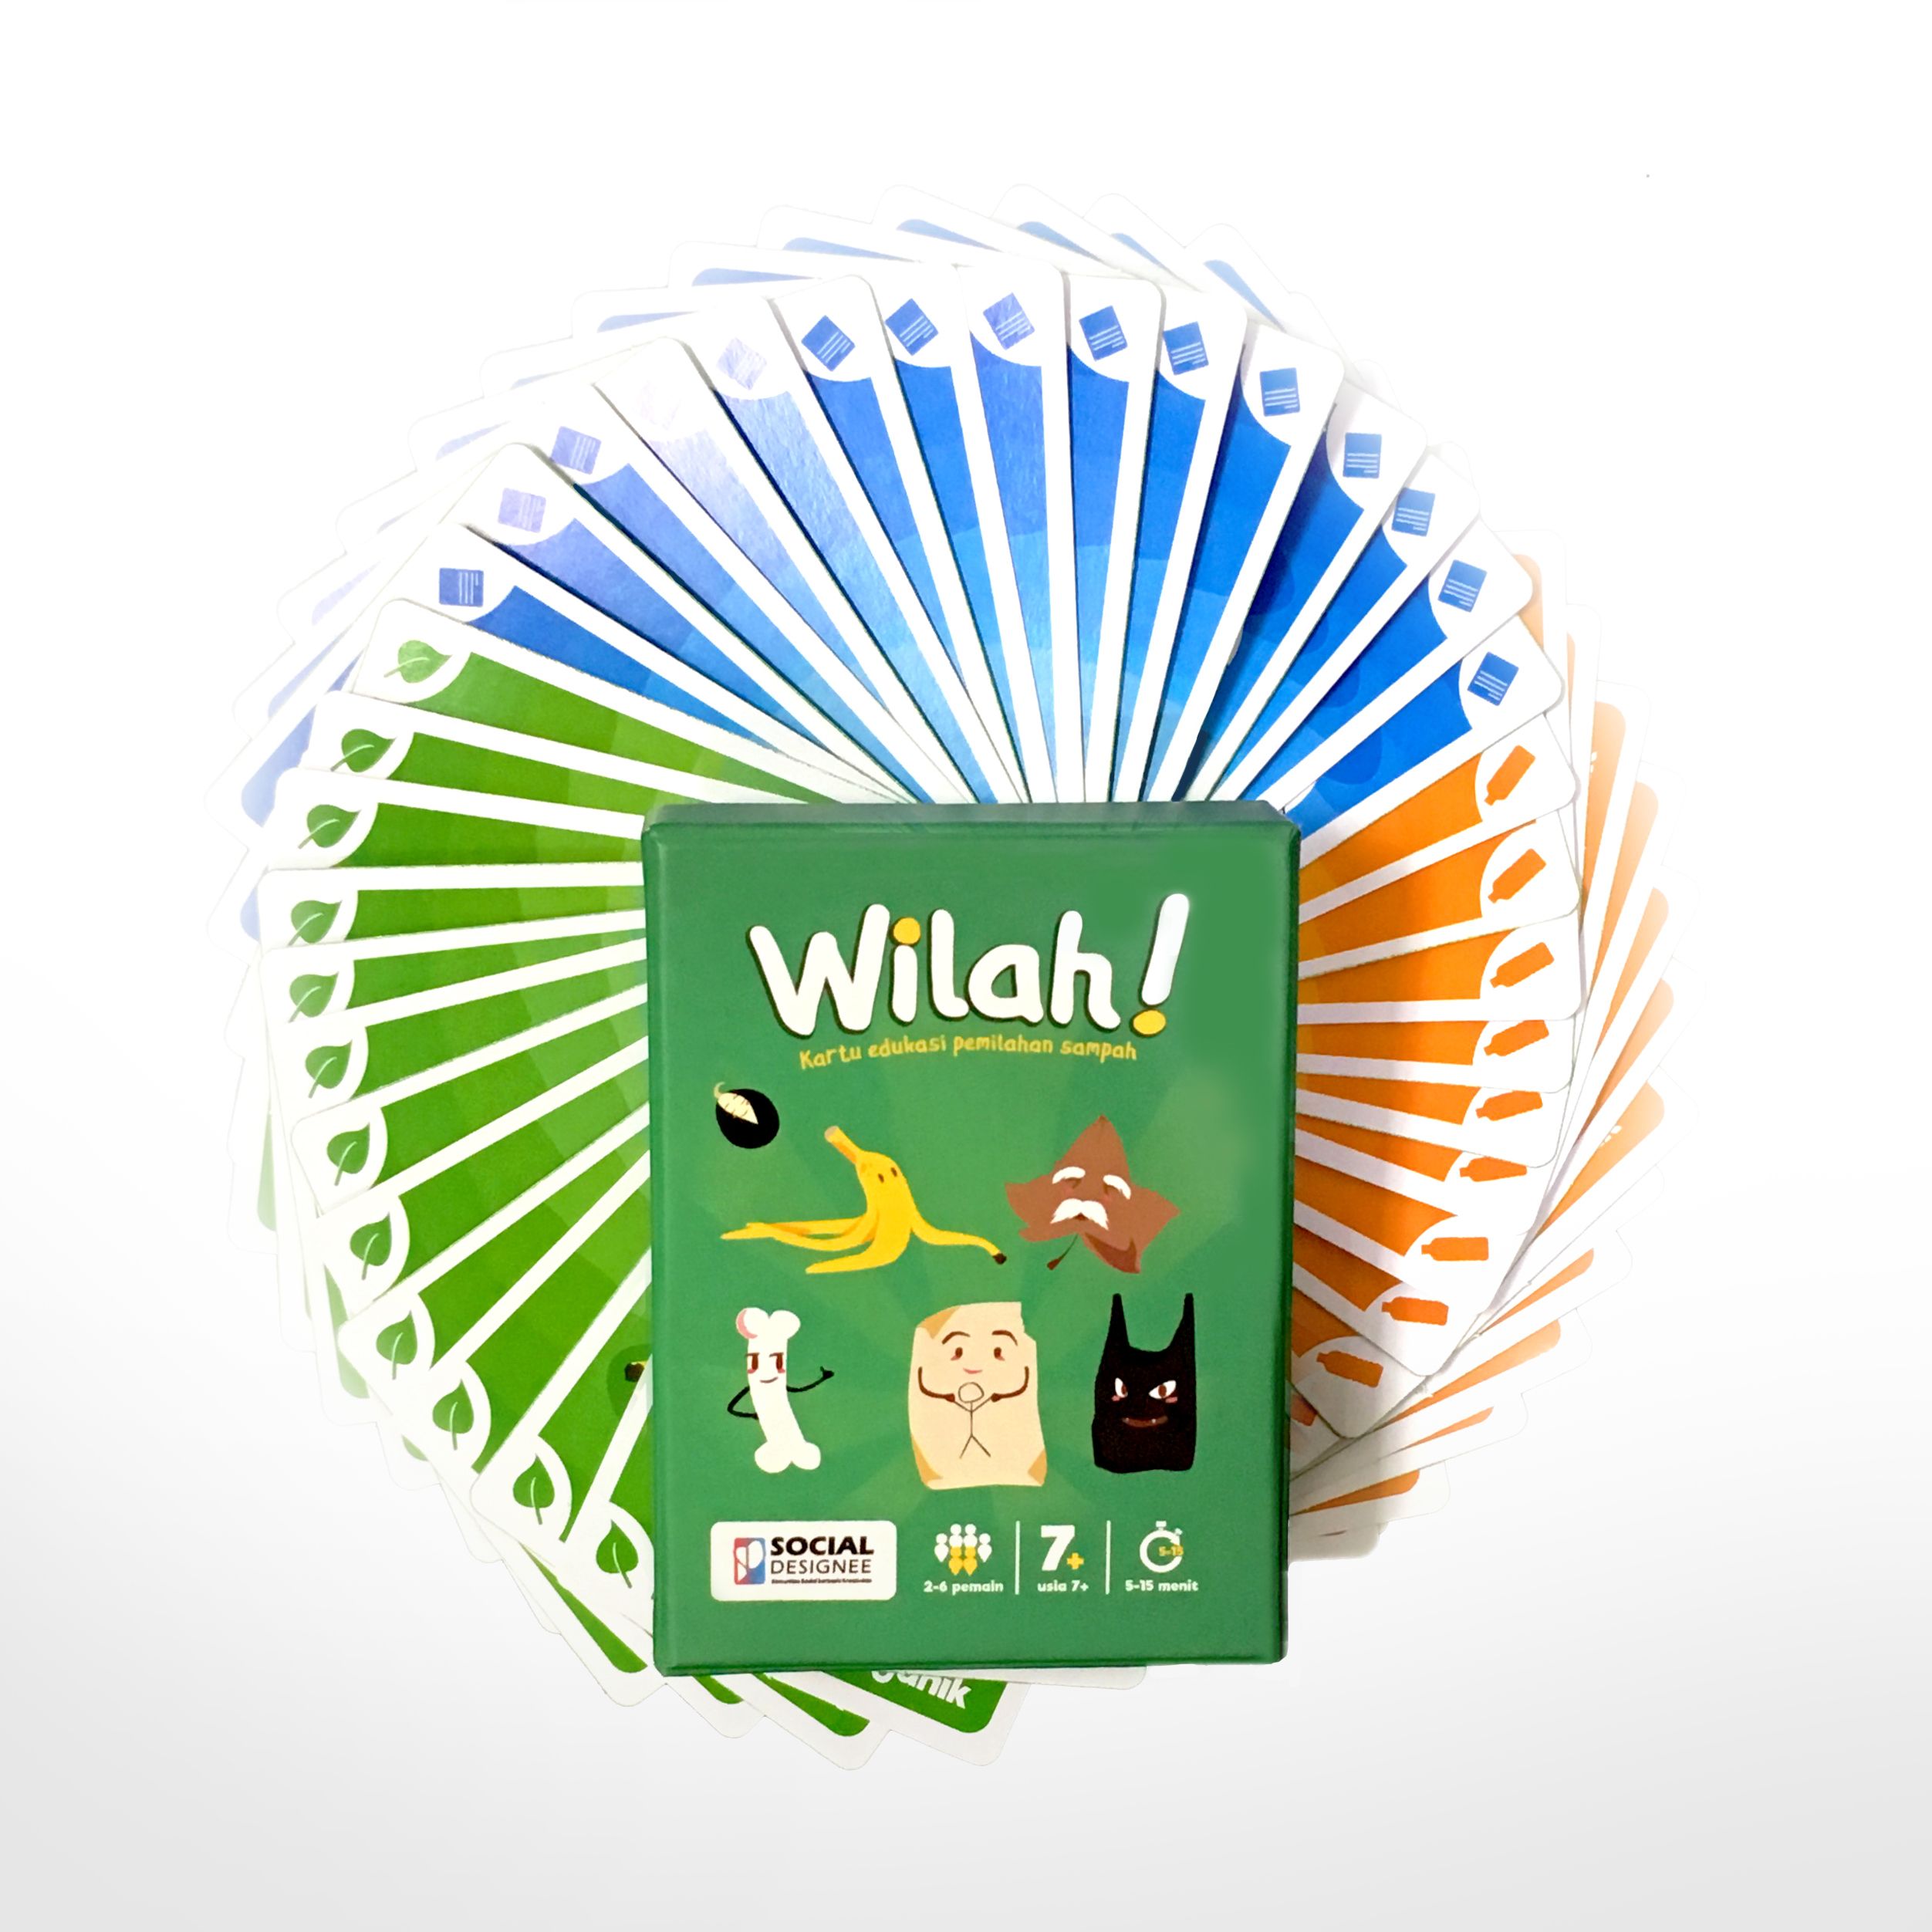 Wilah!: Waste Sorting Educational Card Game